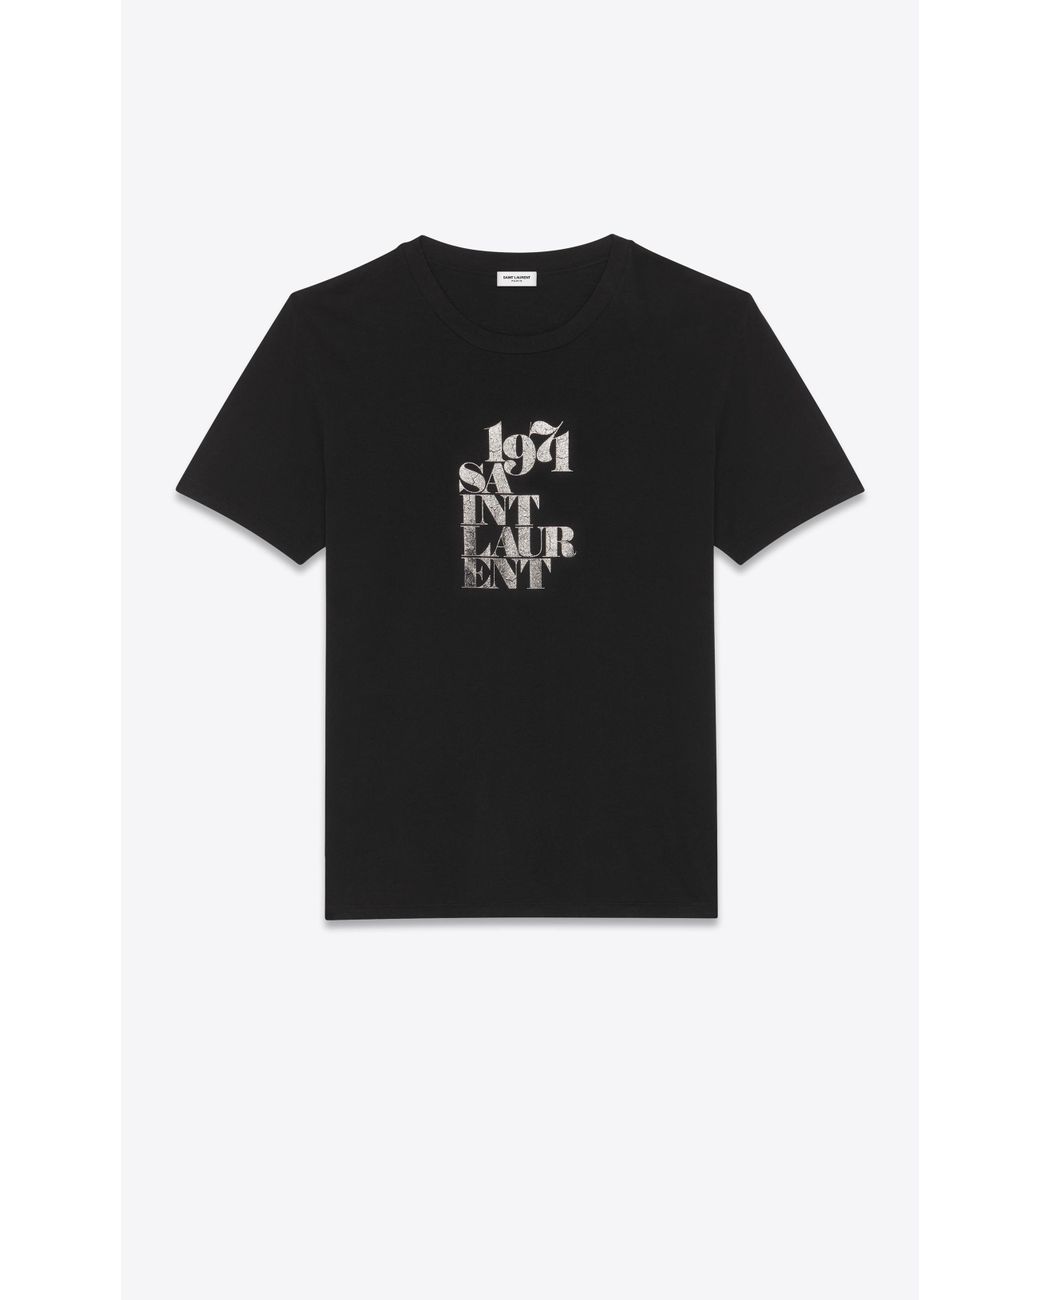 Saint Laurent 1971 T-shirt in Black for Men | Lyst